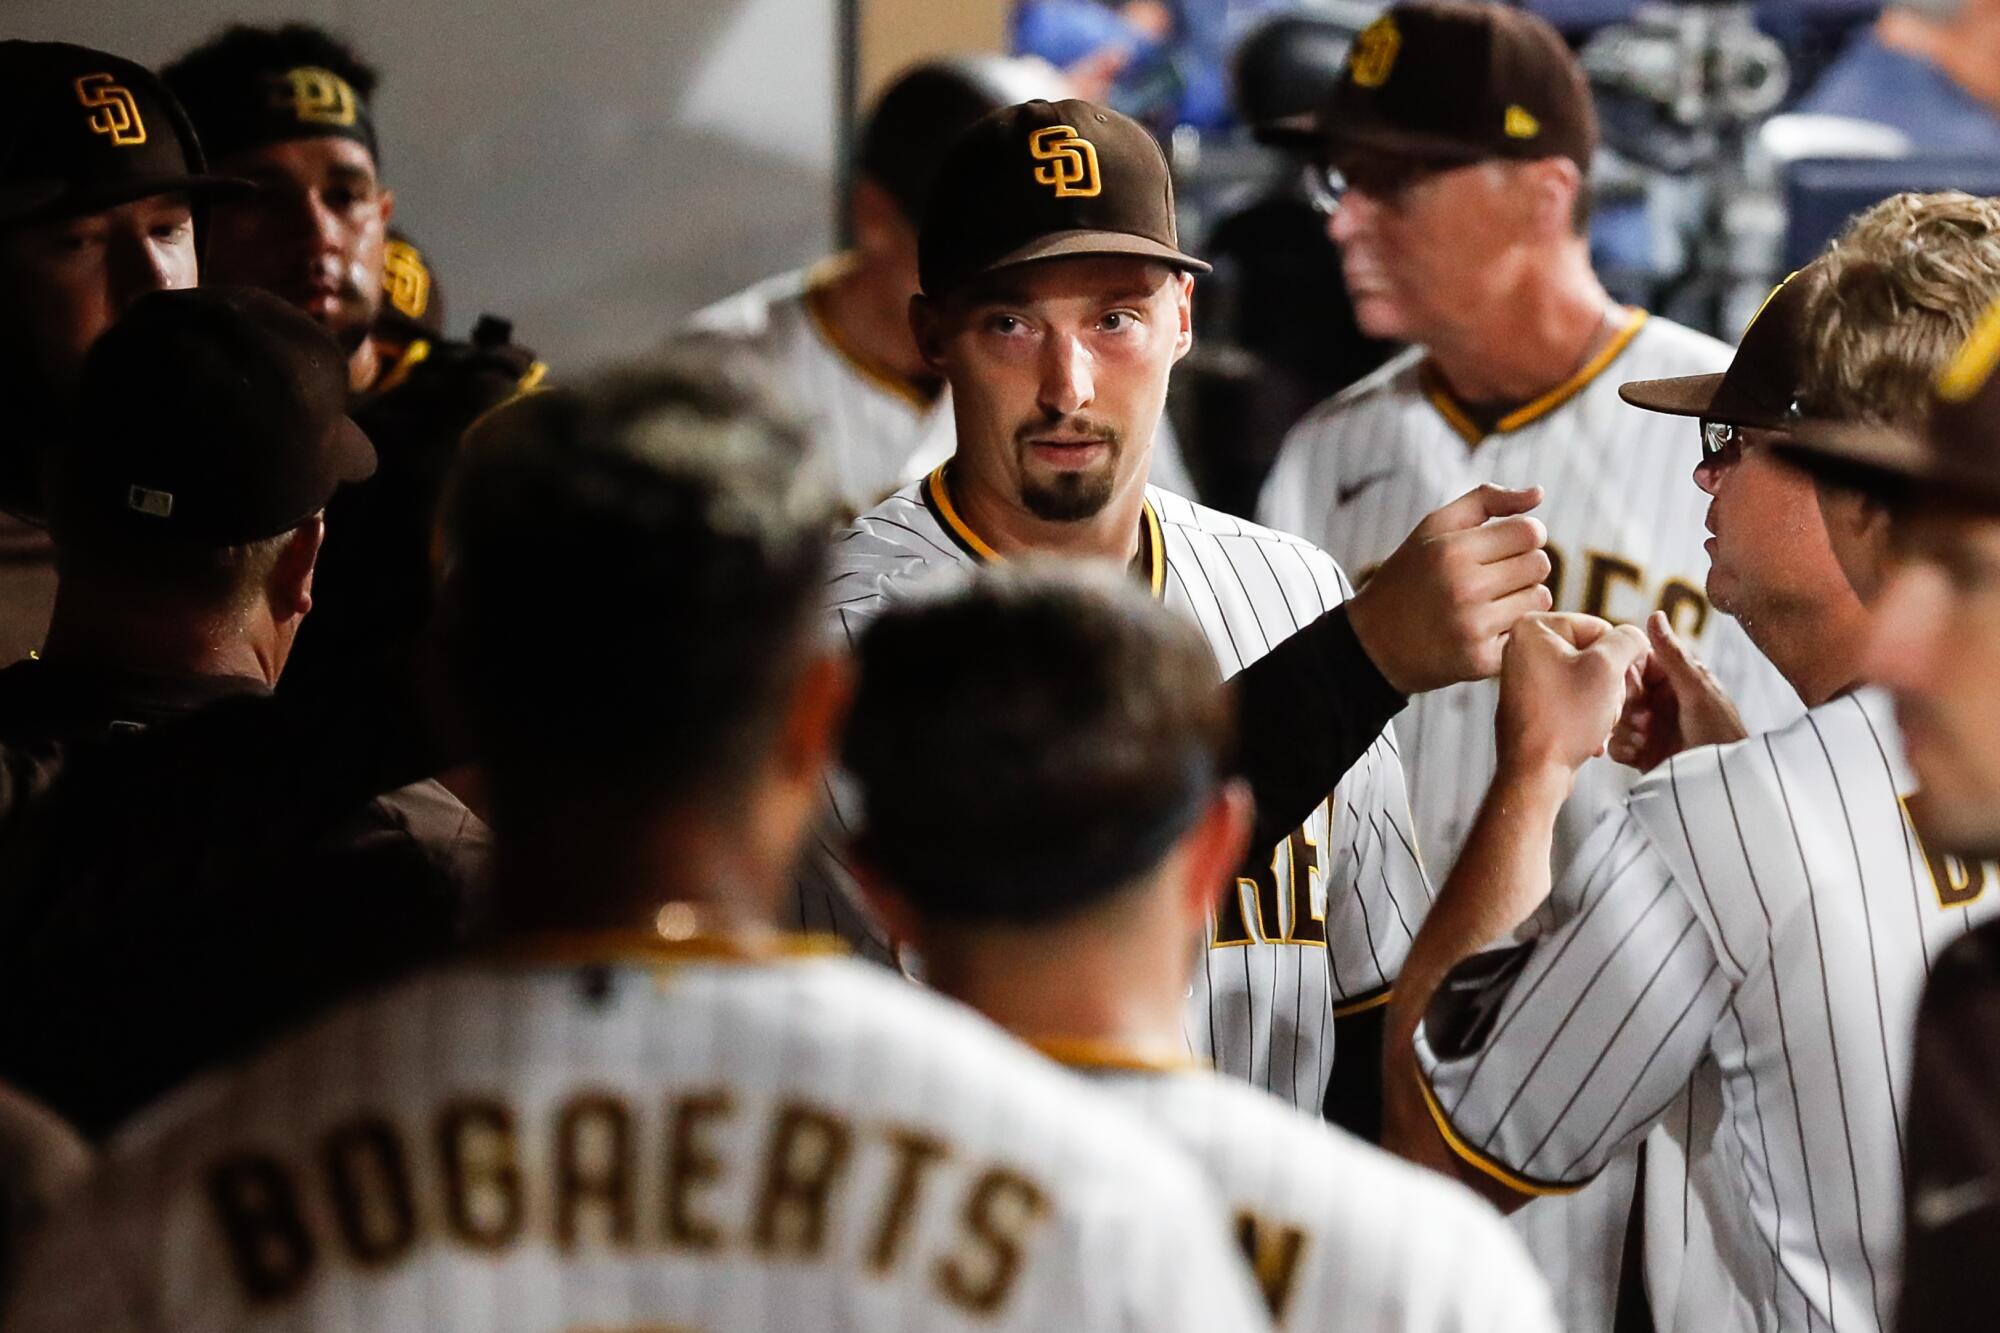 Baseball Brit on X: Blake Snell enjoying his new Padres City